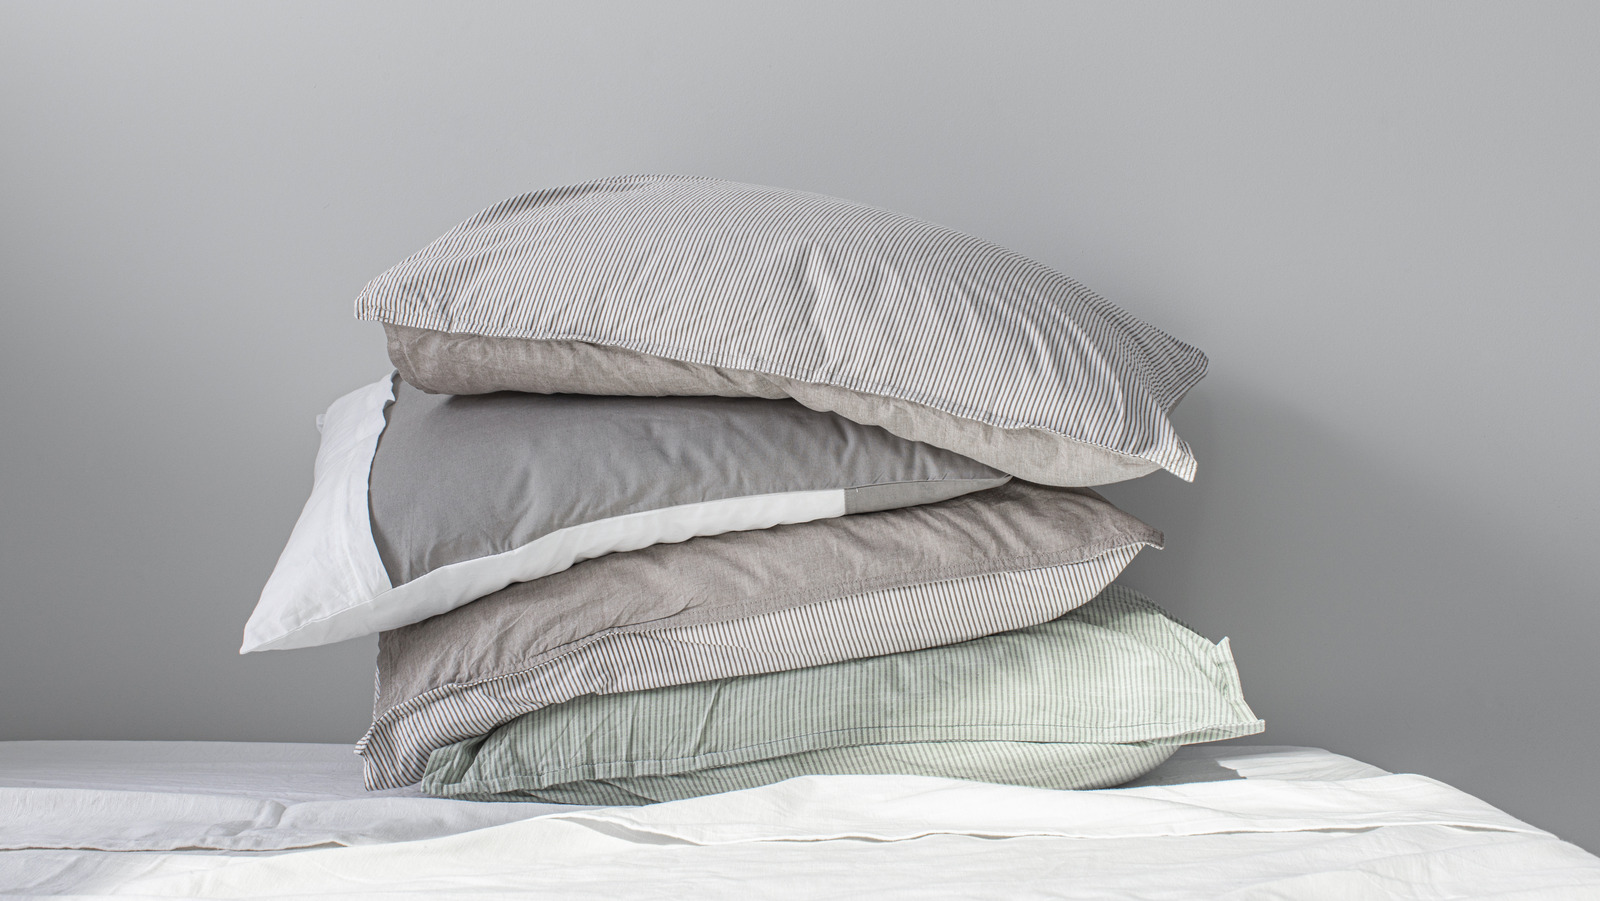 Bedding, Pillow Case Pillow Cover Homemade From A Luis Vuitton Dust Bag  18x11